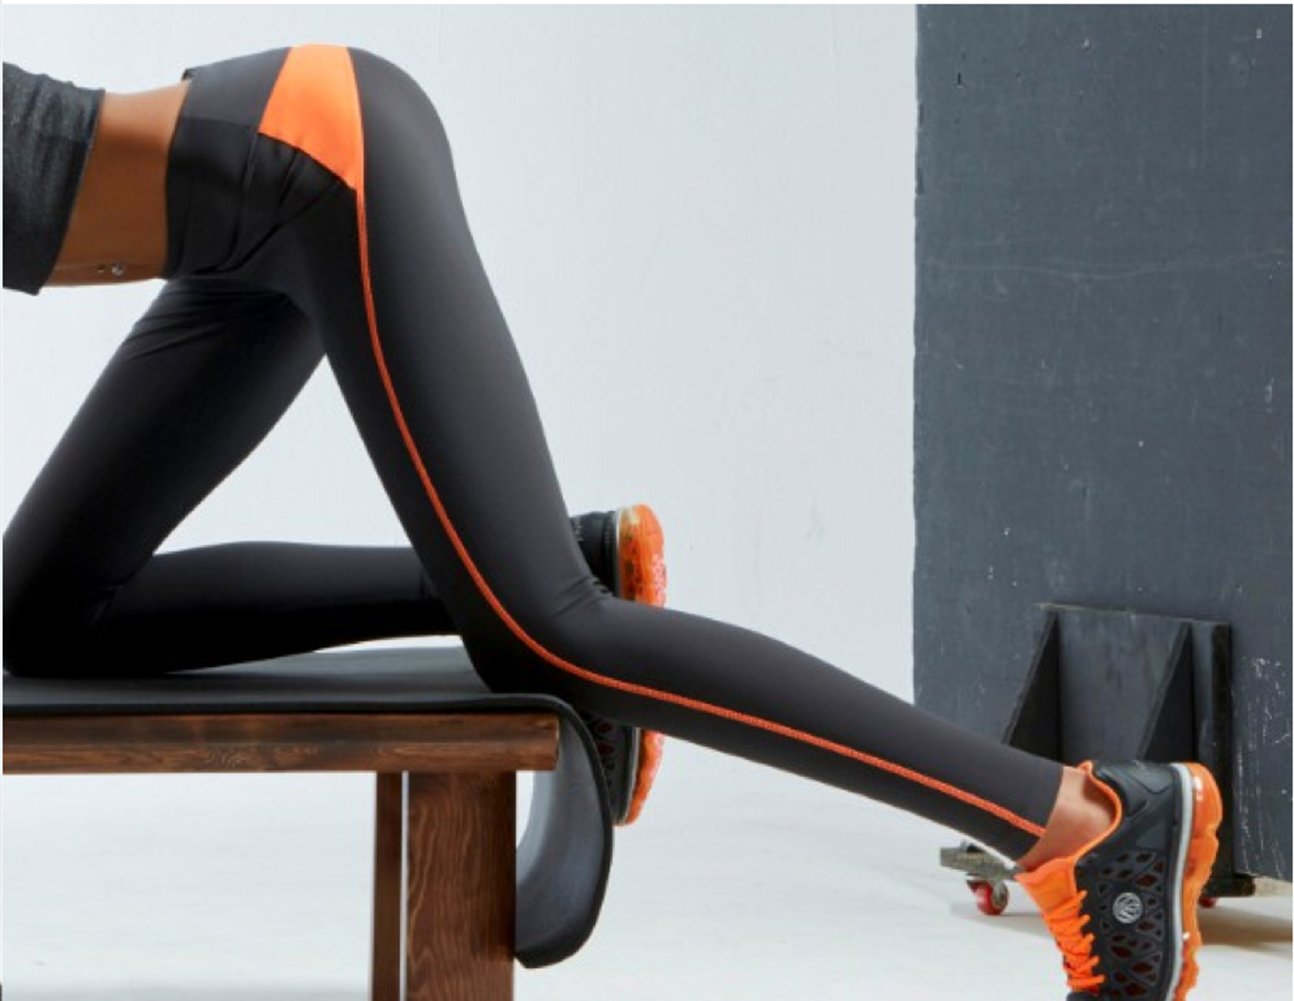 Quick Dry Athletic Wear Sport full length yoga Pants